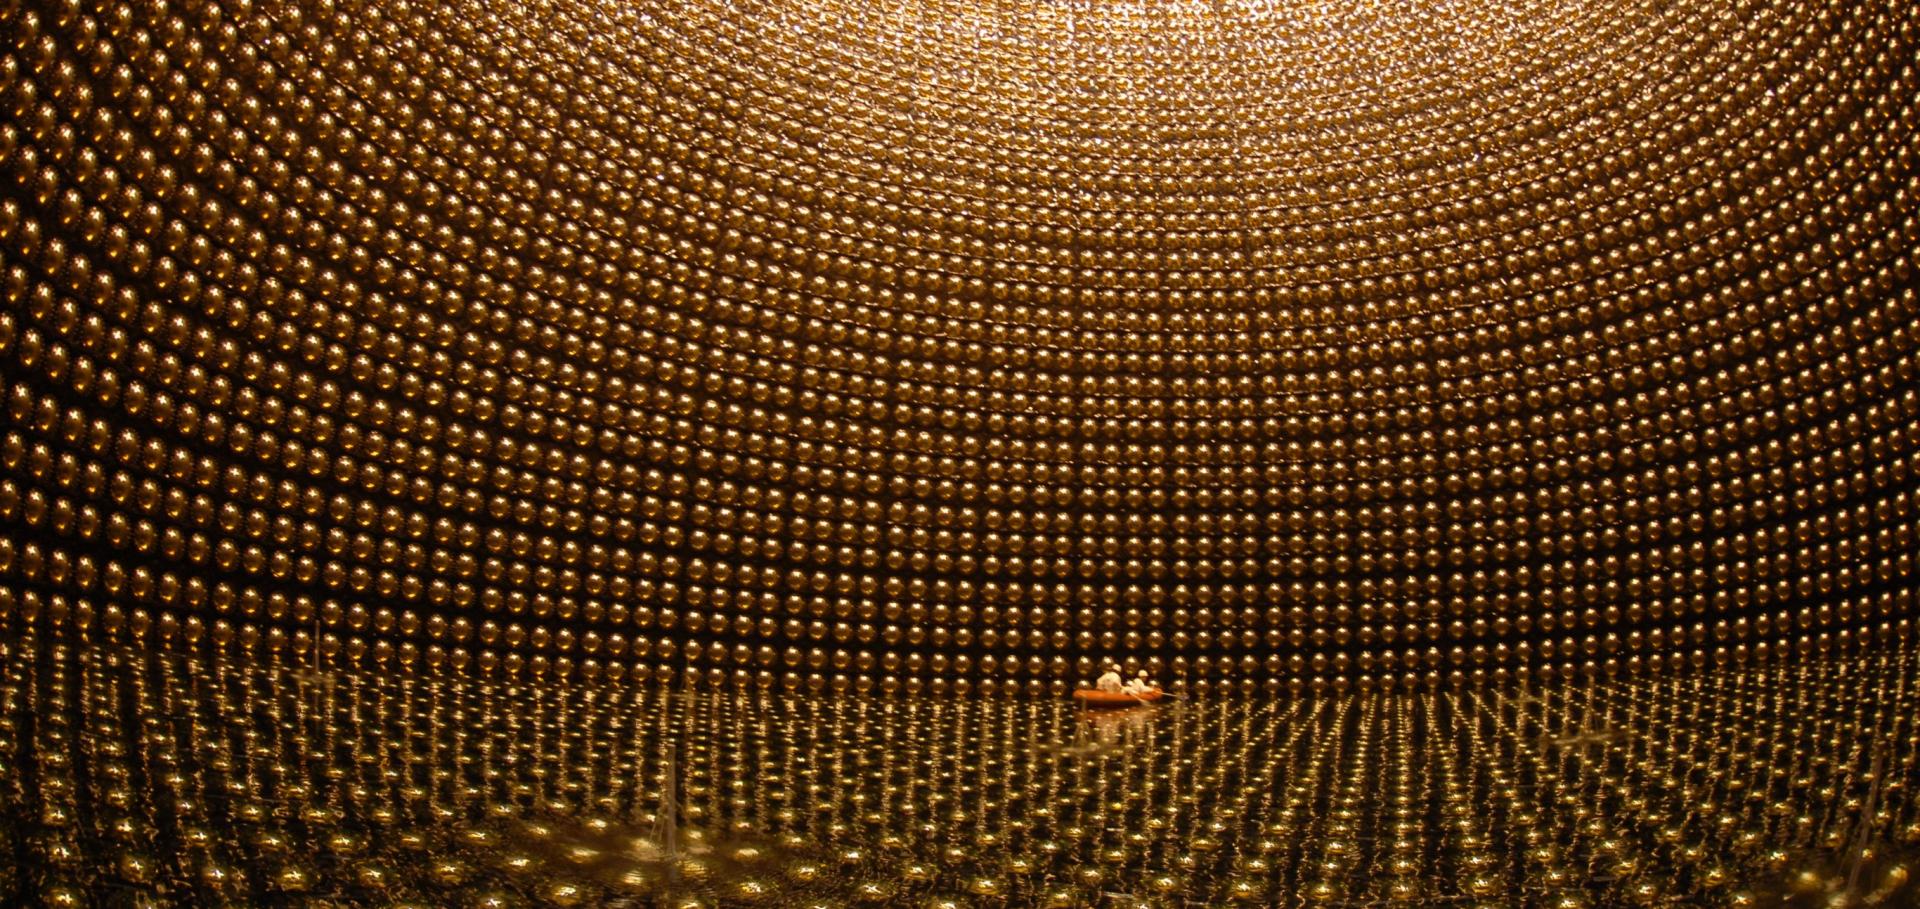 Inside the Super-Kamiokande detector in Japan